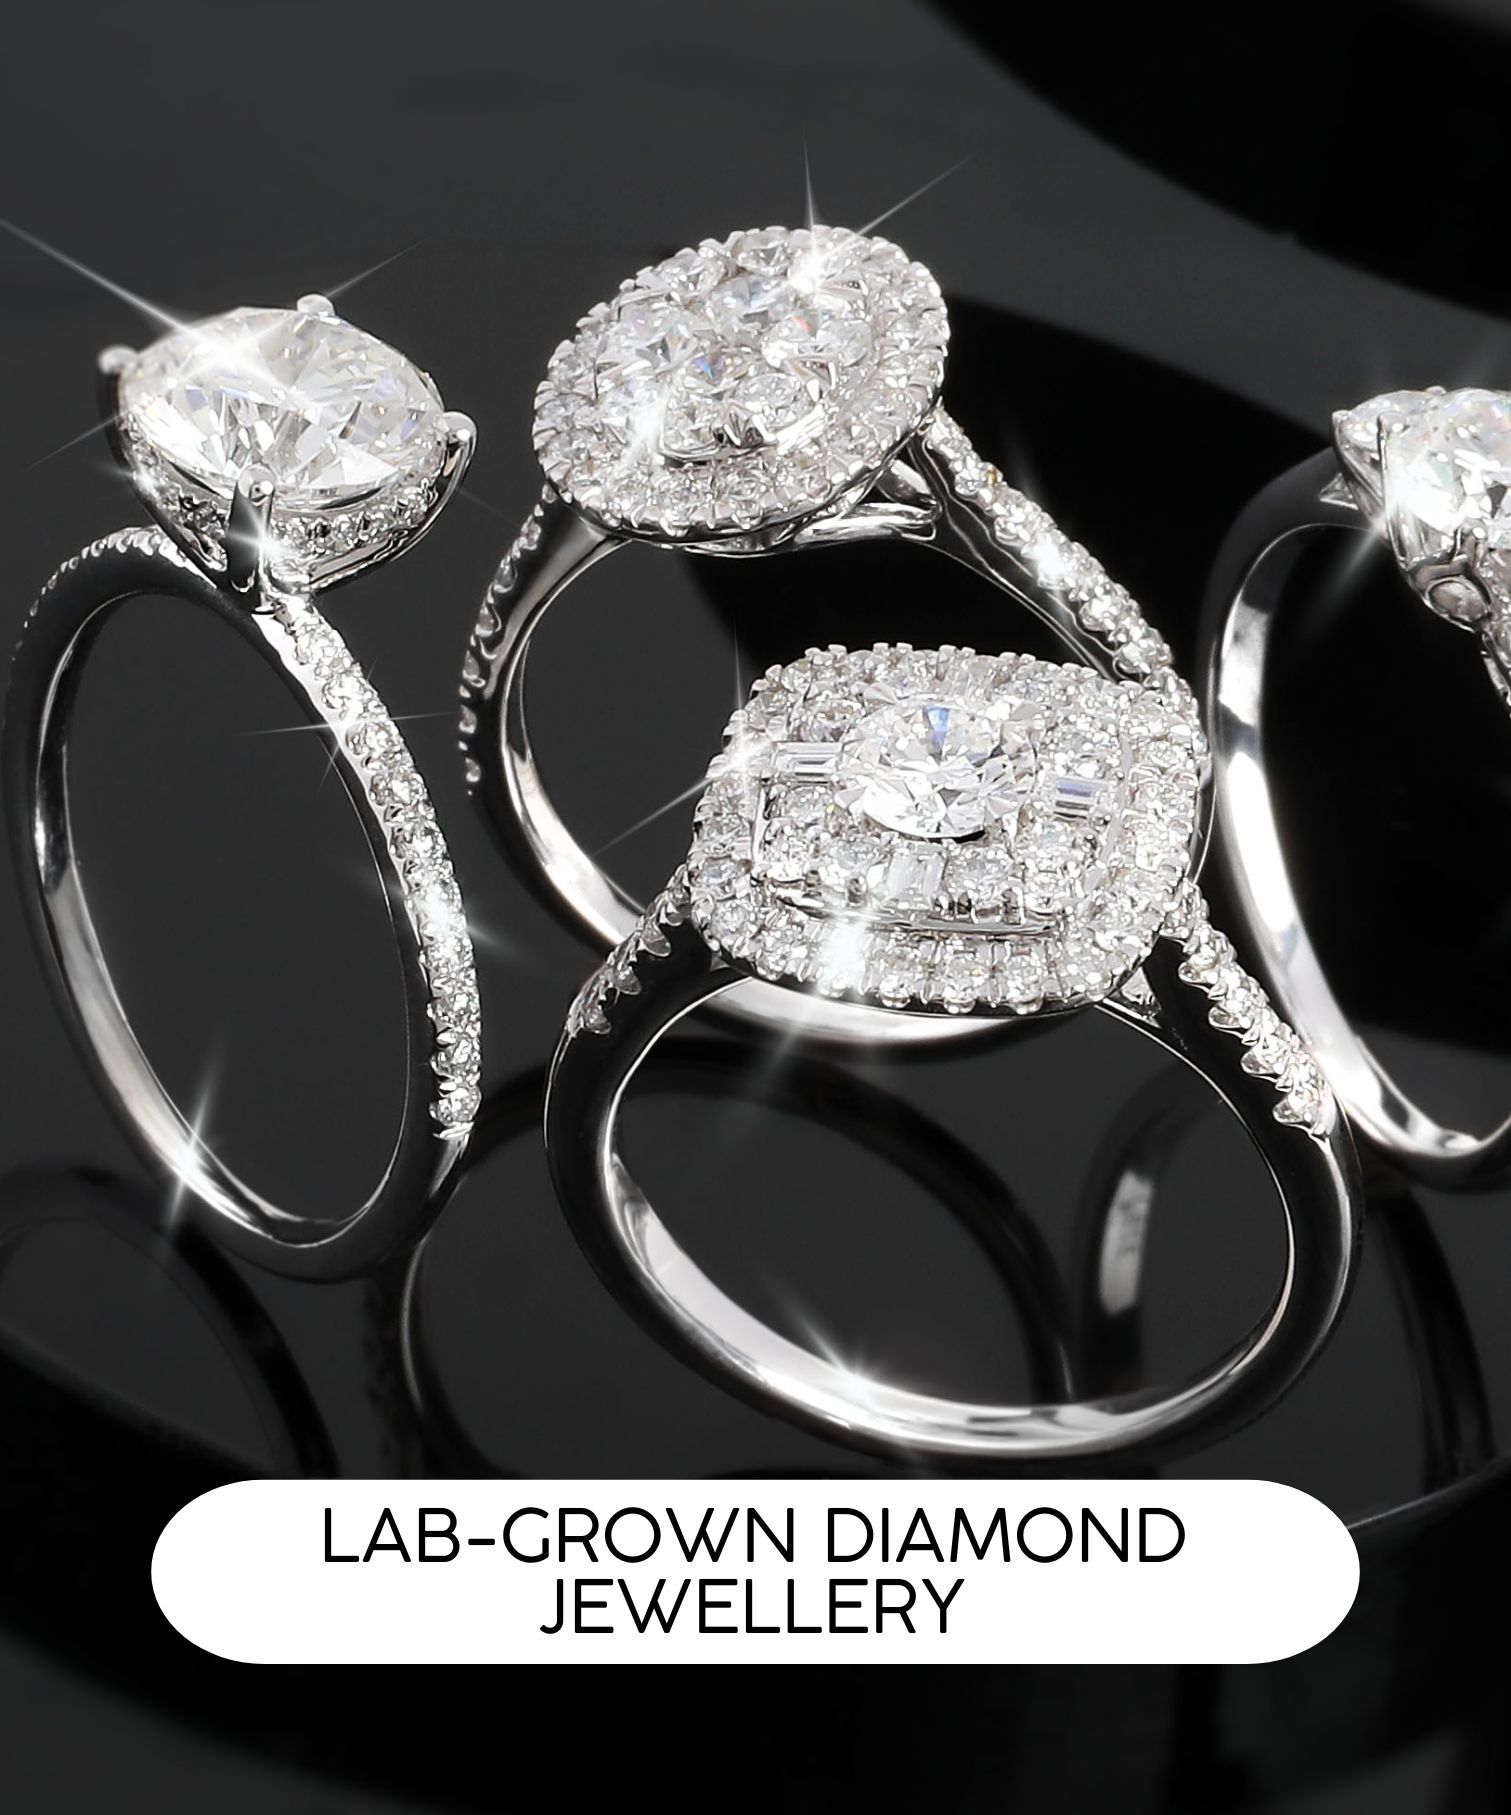 Lab-Grown Diamond Jewellery